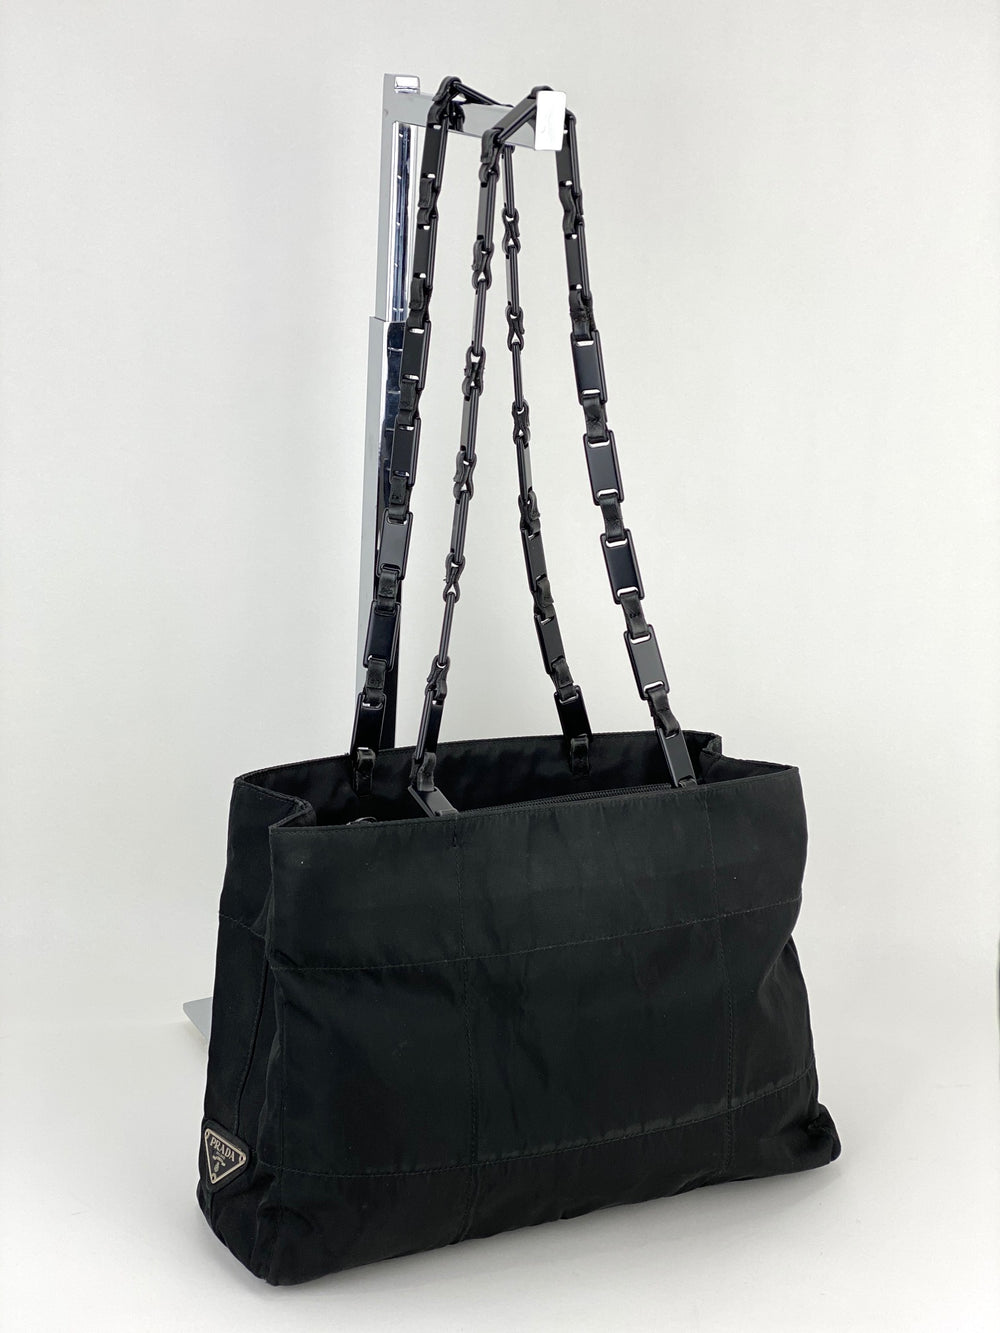 100% Authentic PRADA Nylon Shoulder Bag Noir